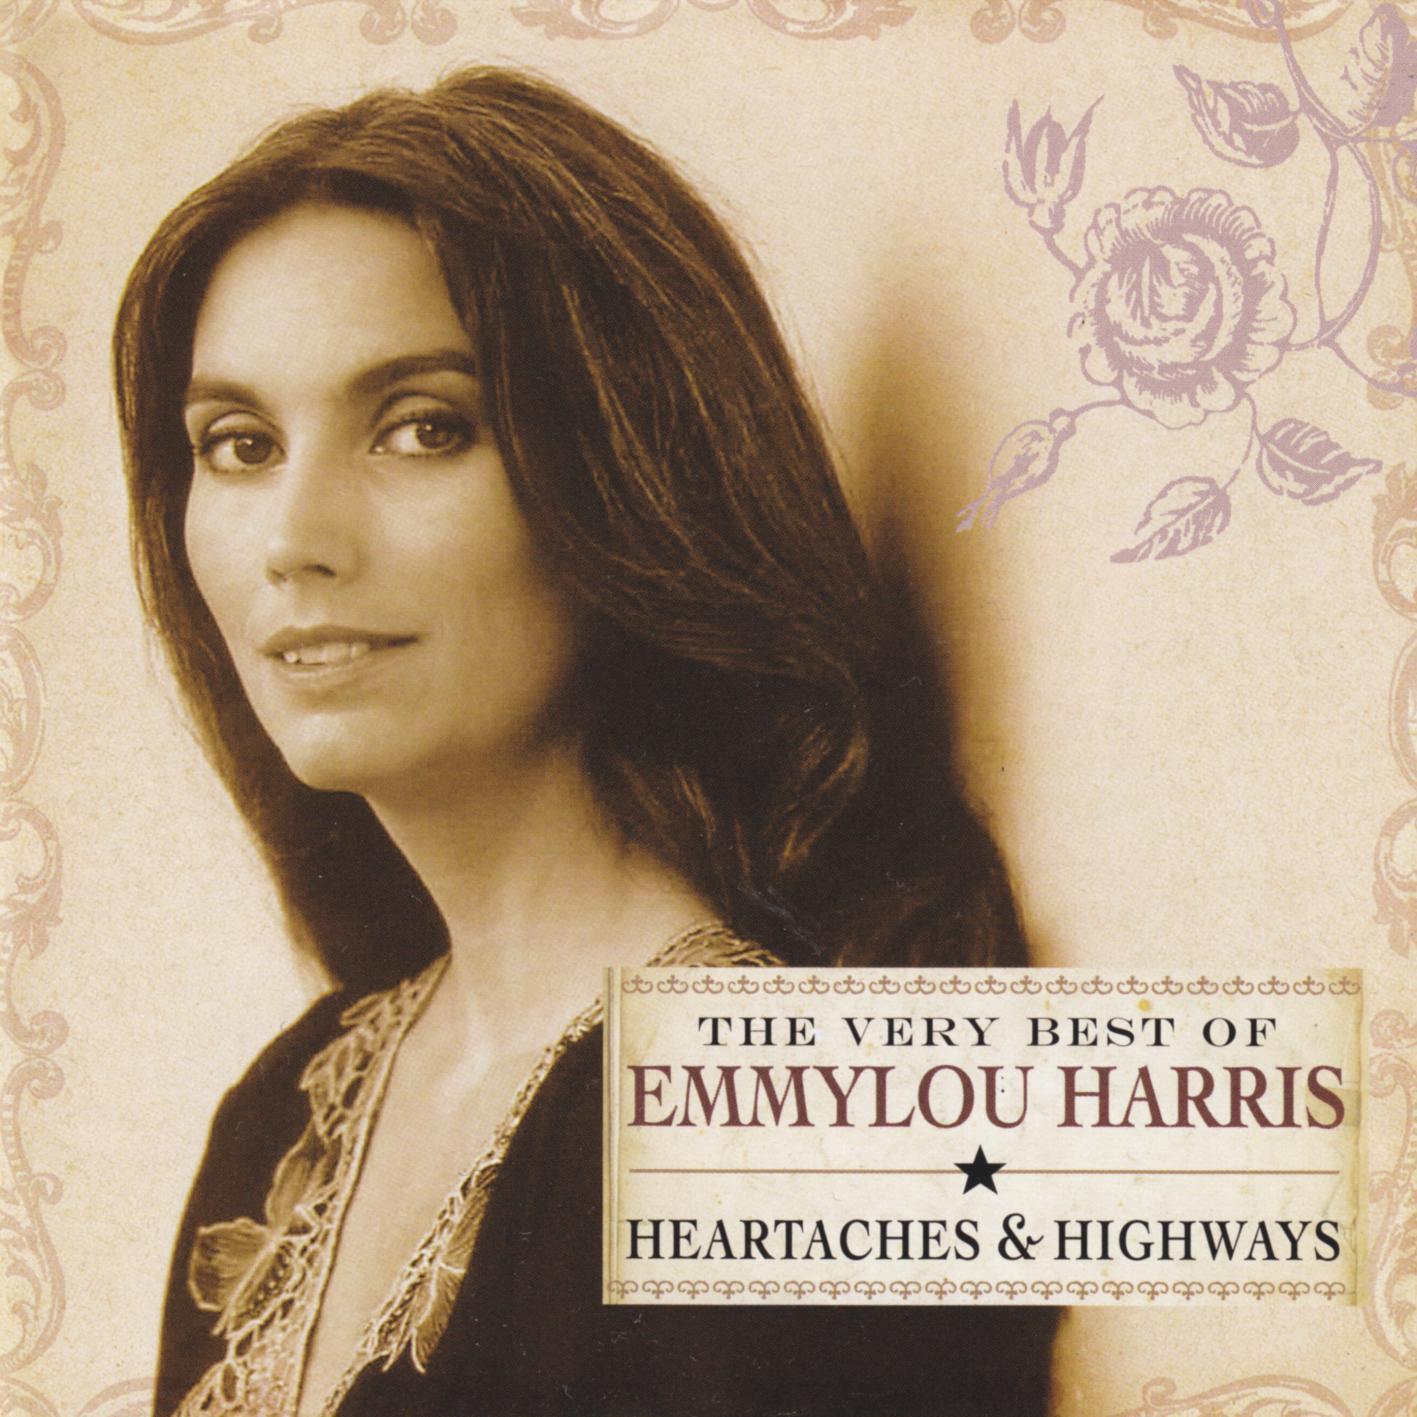 Emmylou Harris Discography